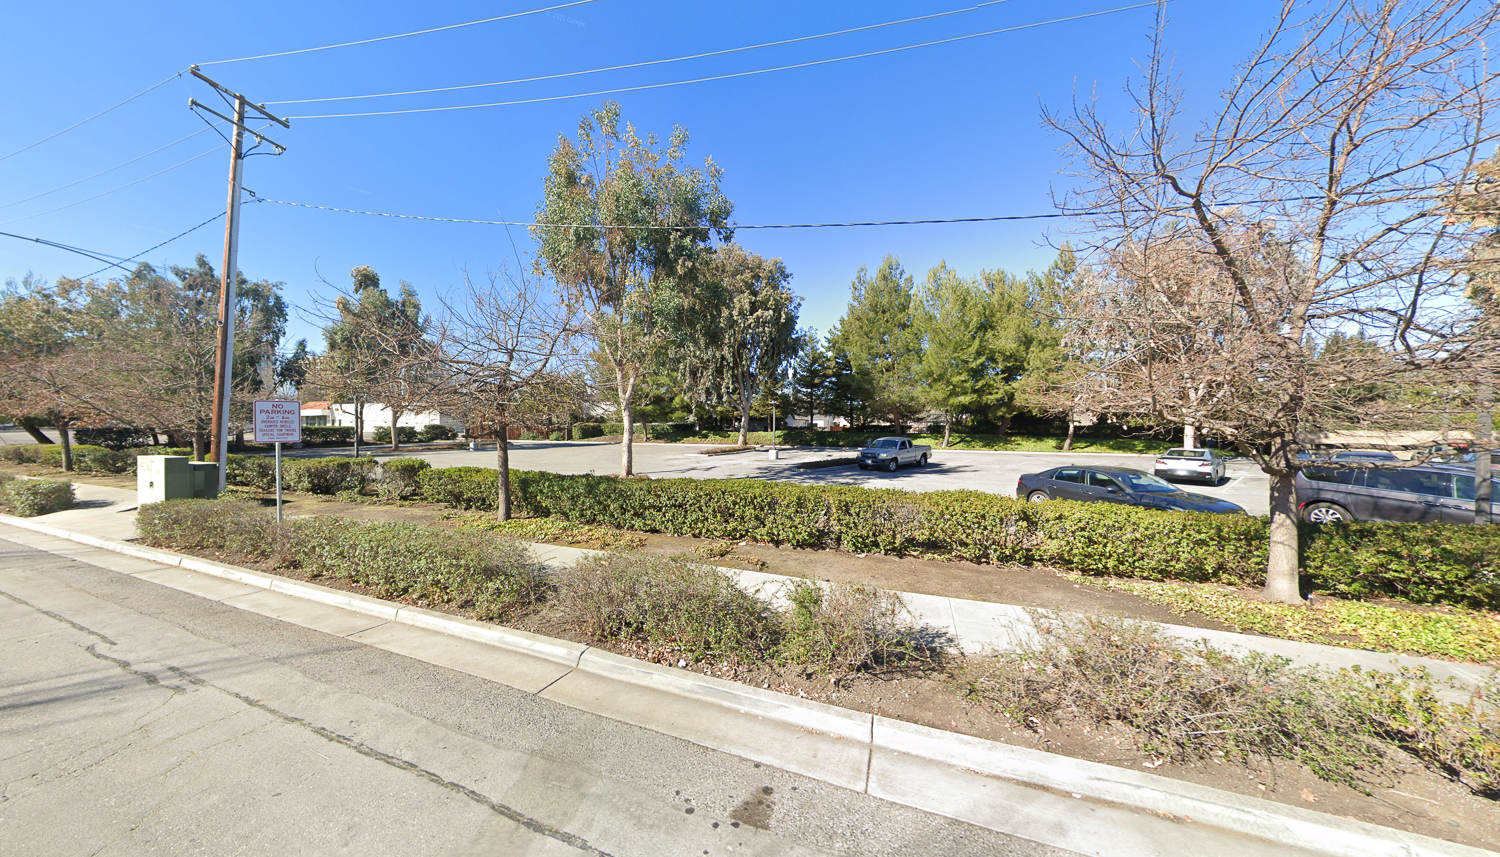 4200 Acacia Avenue, image via Google Street View